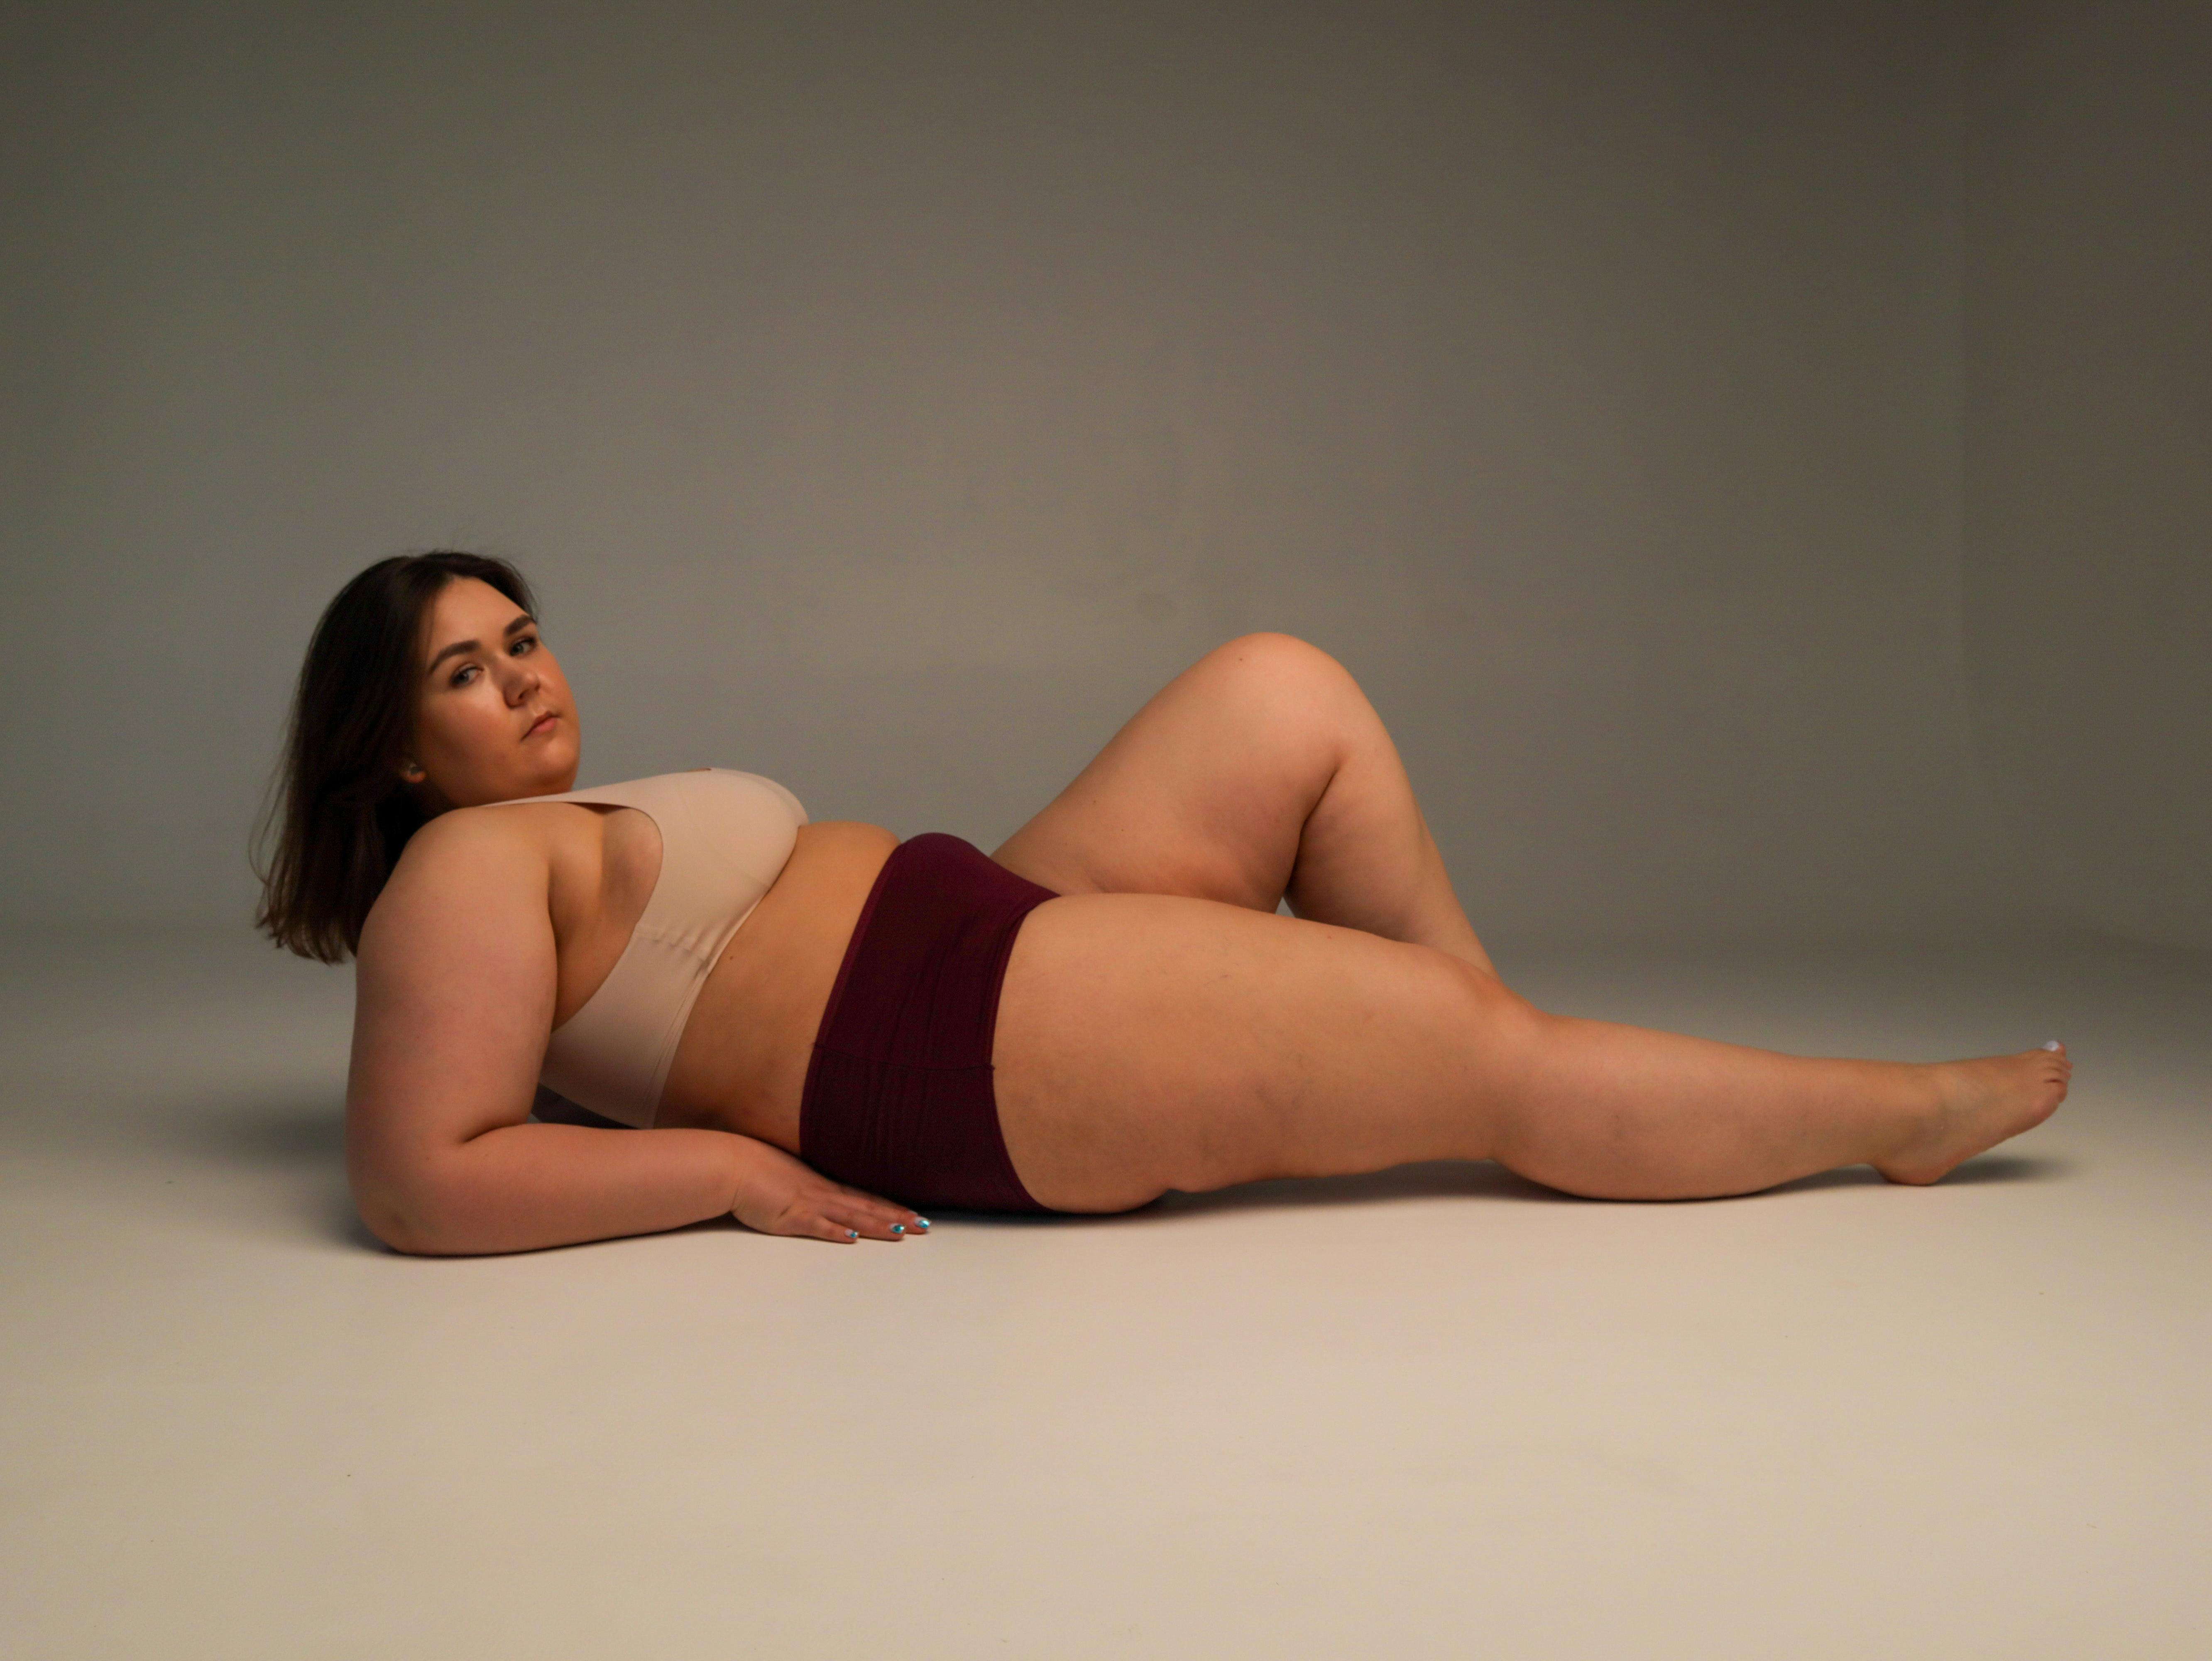 Female Model Lying Down · Free Stock Photo